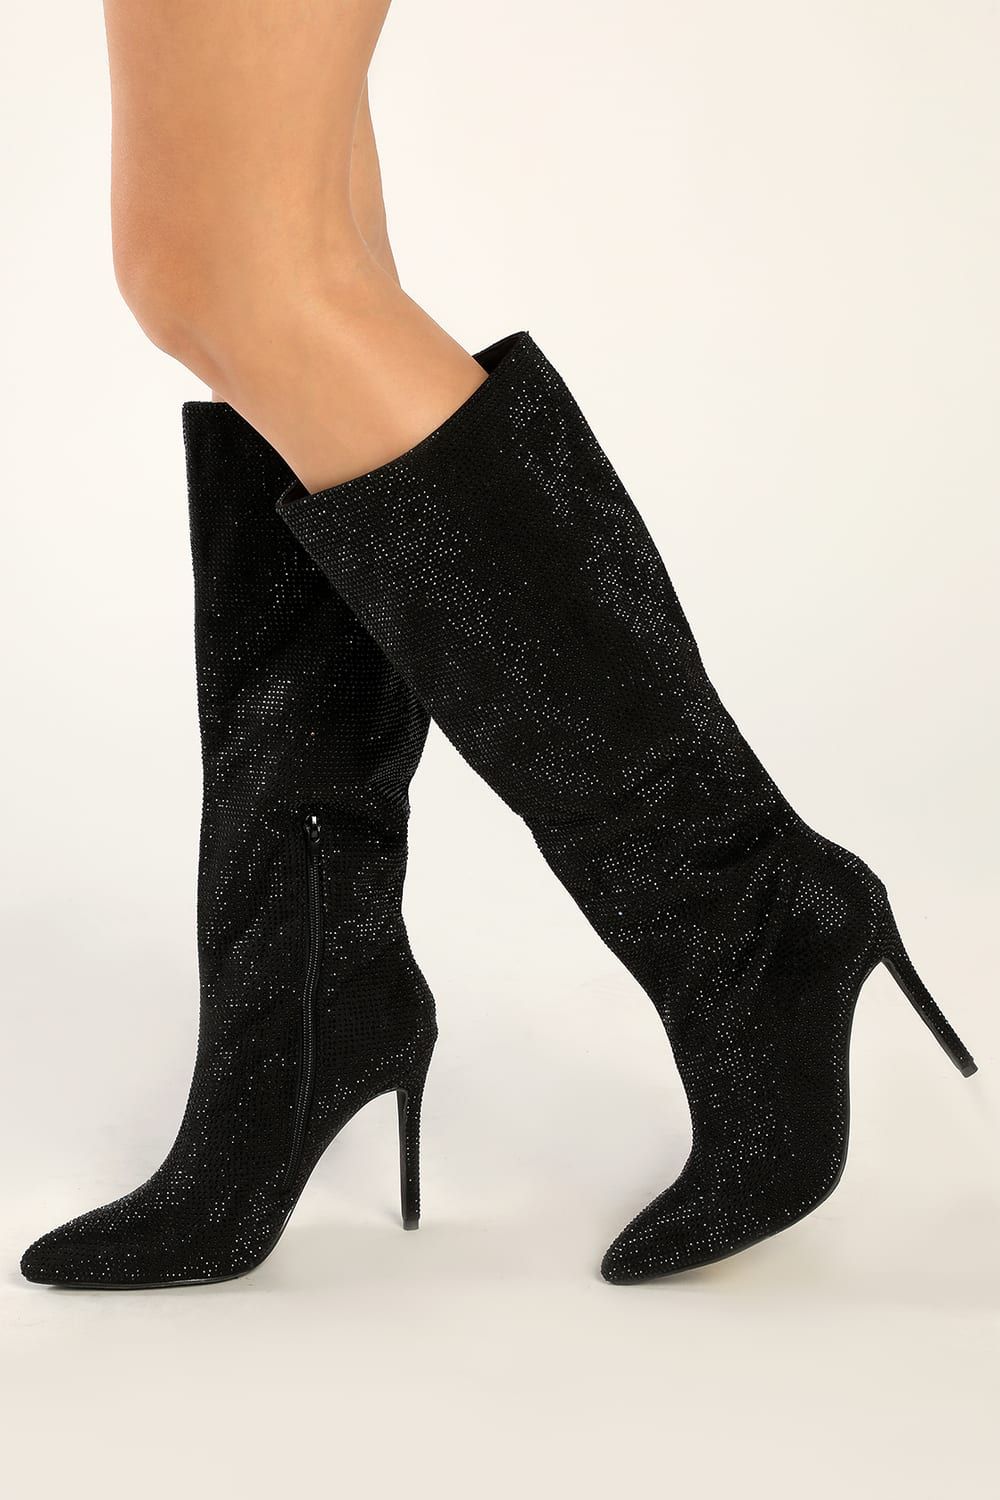 My Crush Black Rhinestone Pointed-Toe Knee-High Boots | Lulus (US)